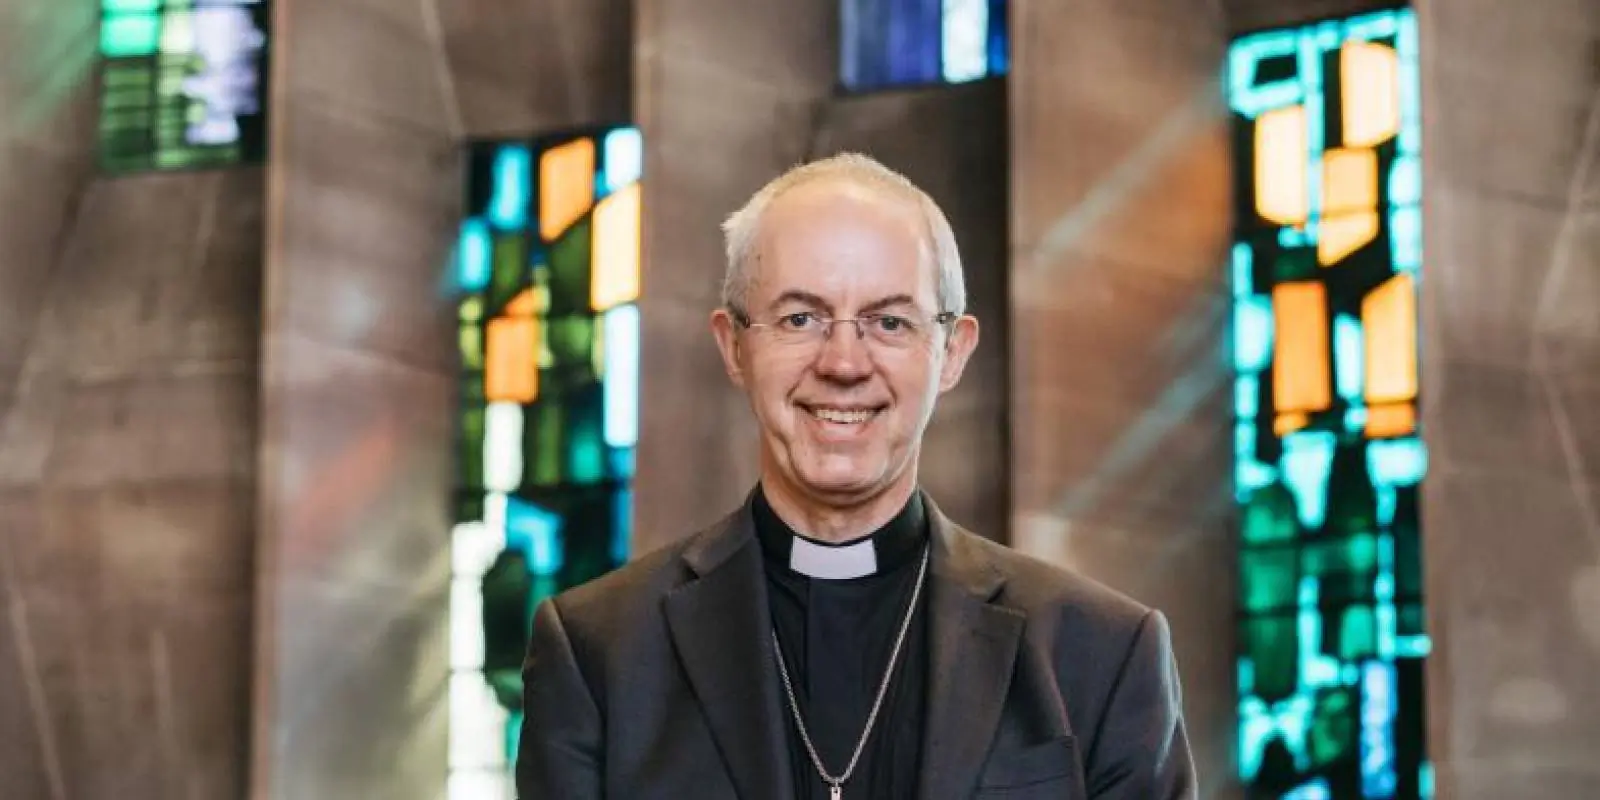 Rt. Rev. Justin Welby, Archbishop of Canterbury